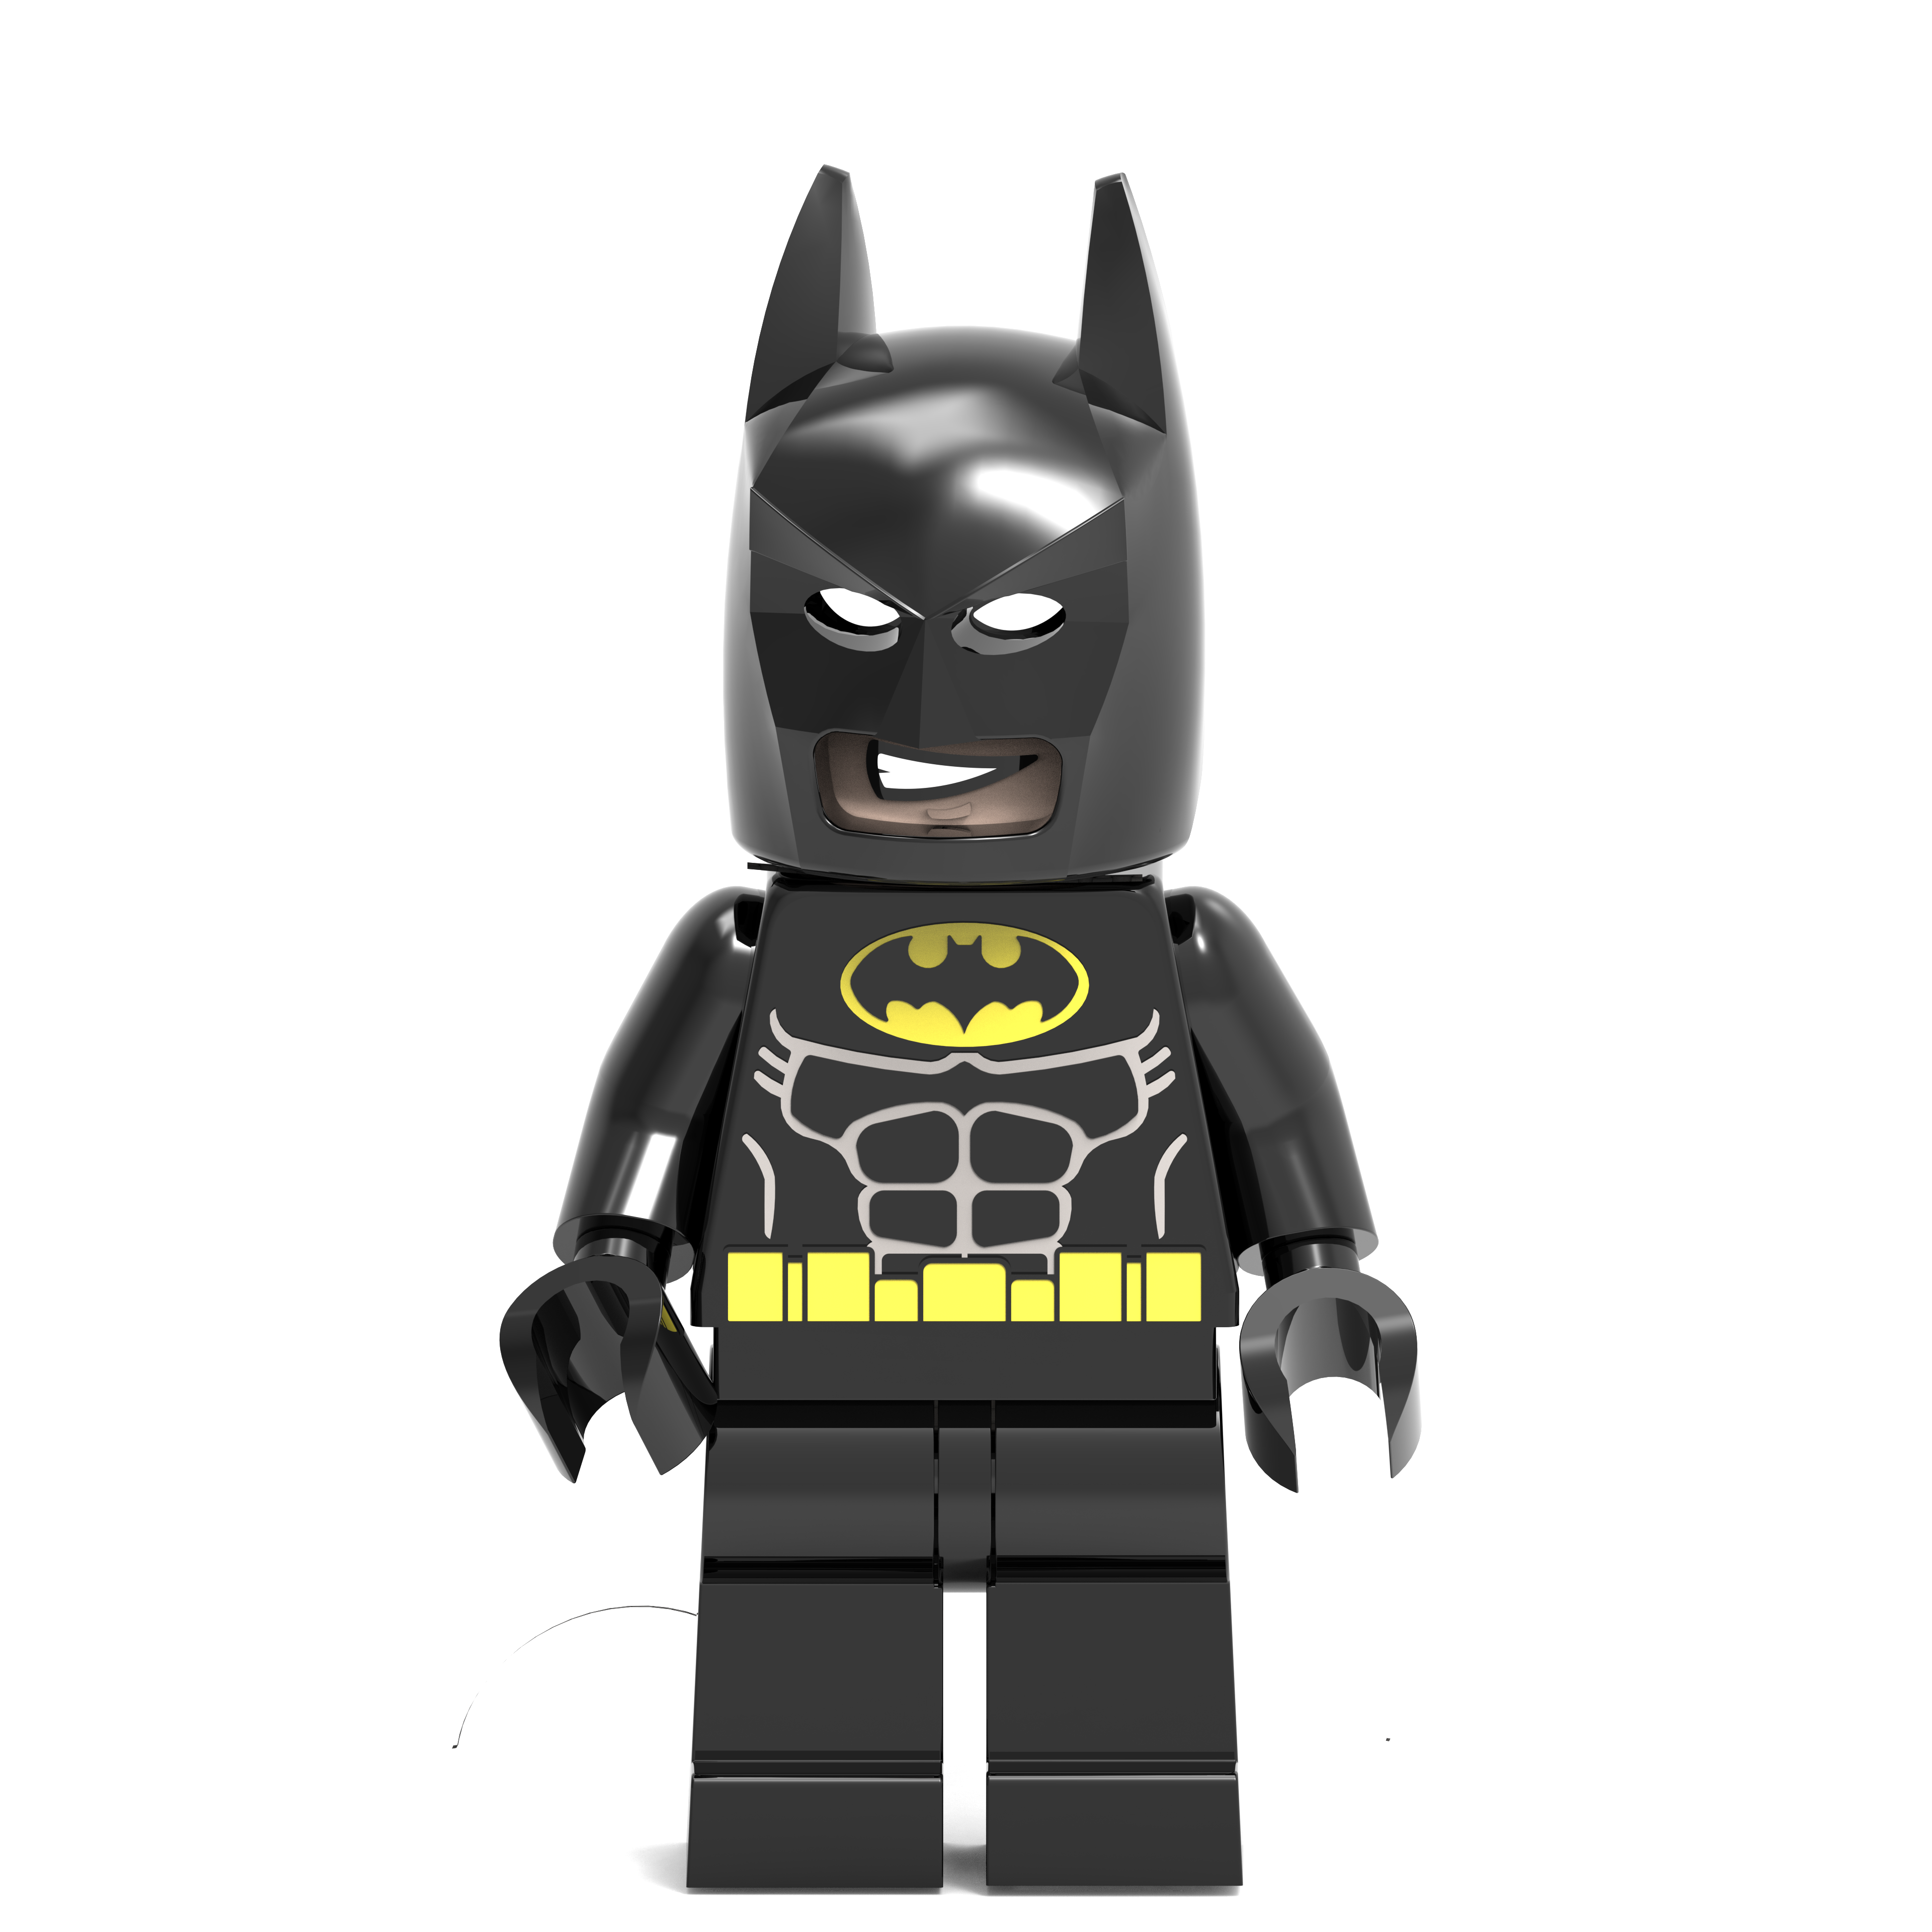 Batman Lego 3D - 3D model by Roboninja on Thangs